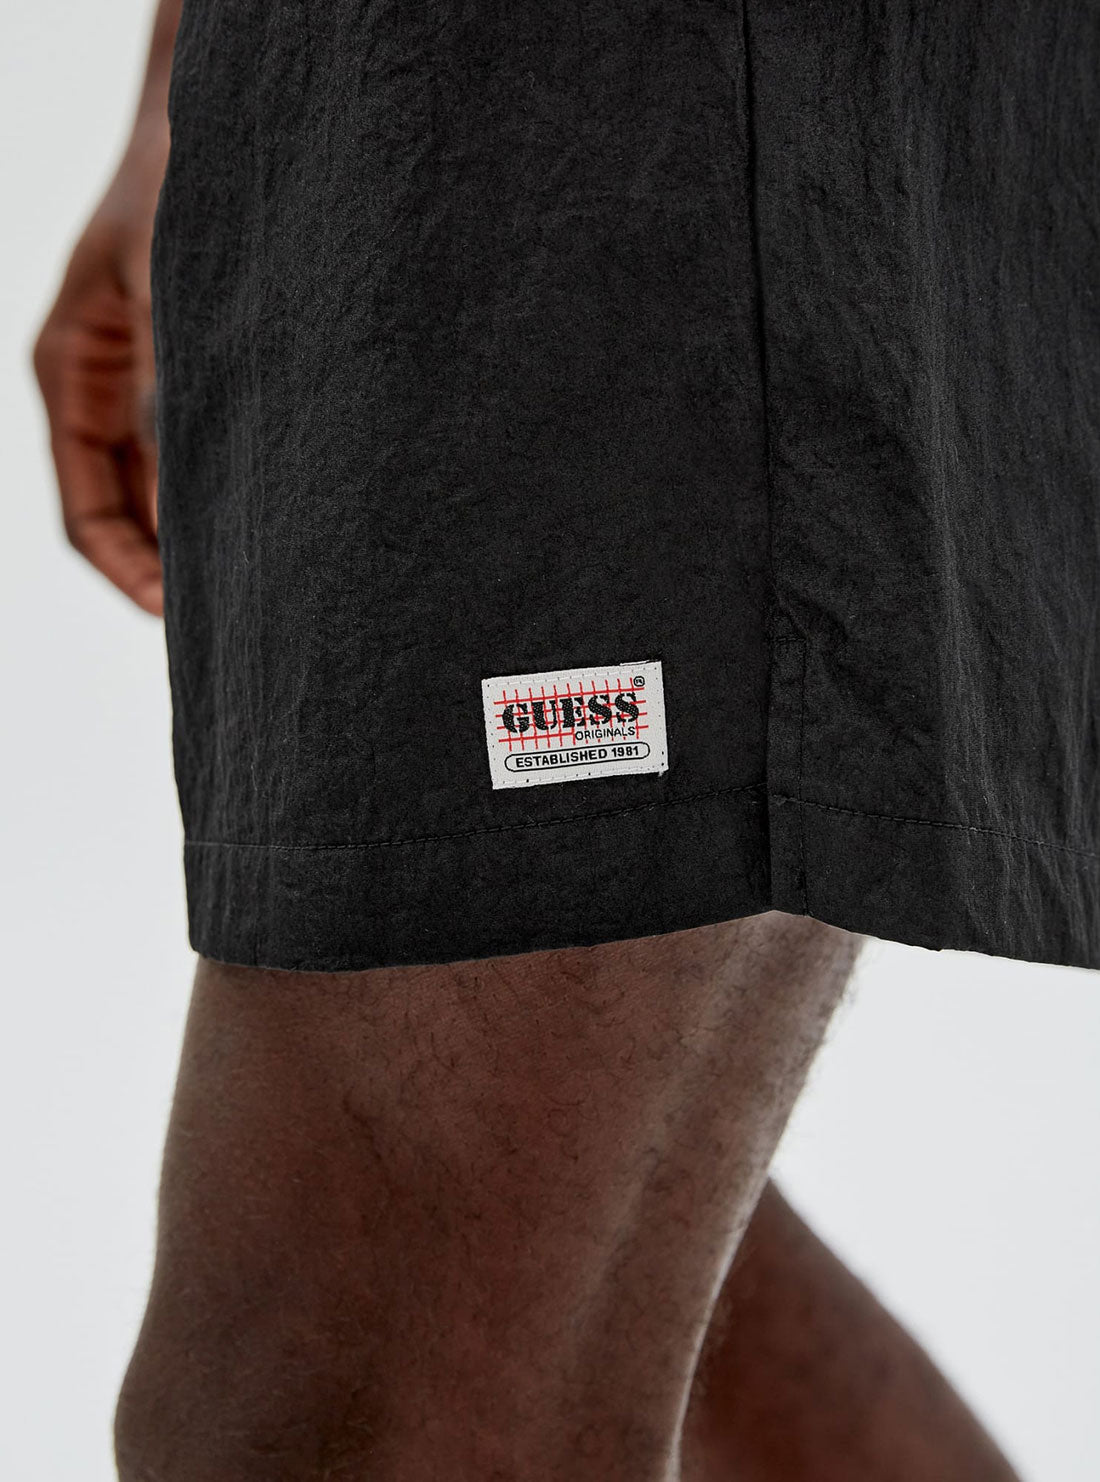 GUESS Mens GUESS Originals Black Nylon Patch Shorts M2GQ03WC481 Detail View